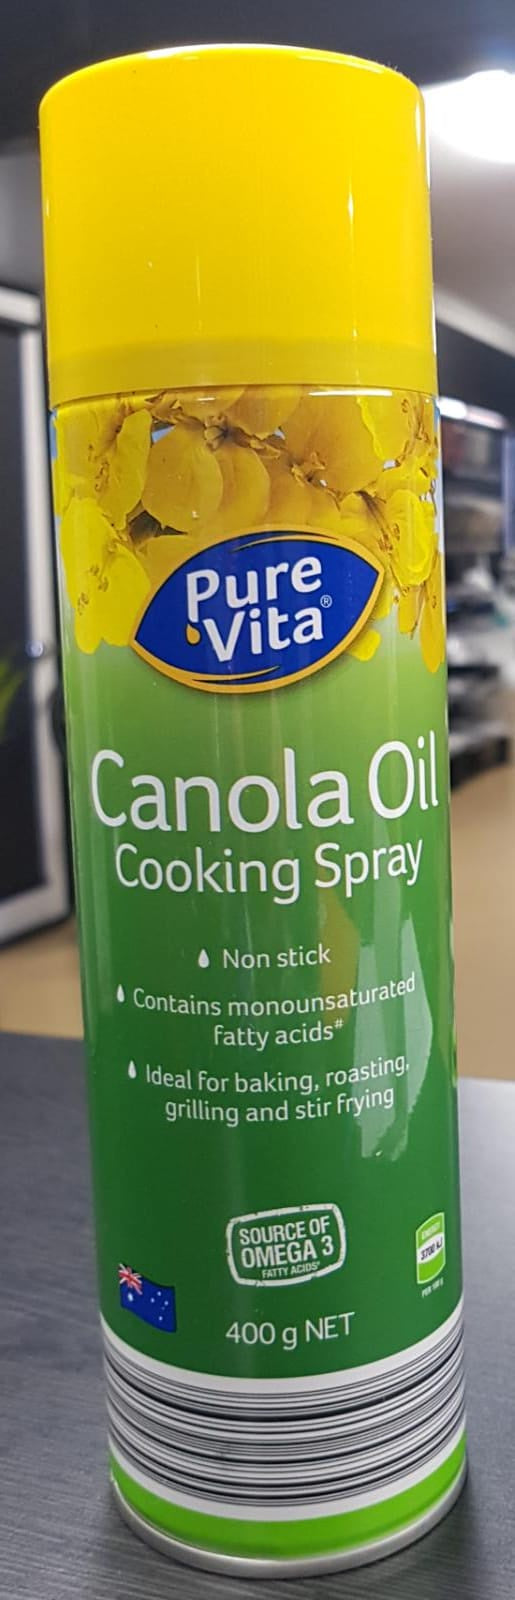 Pure Vita Canola Oil Cooking Spray 400g